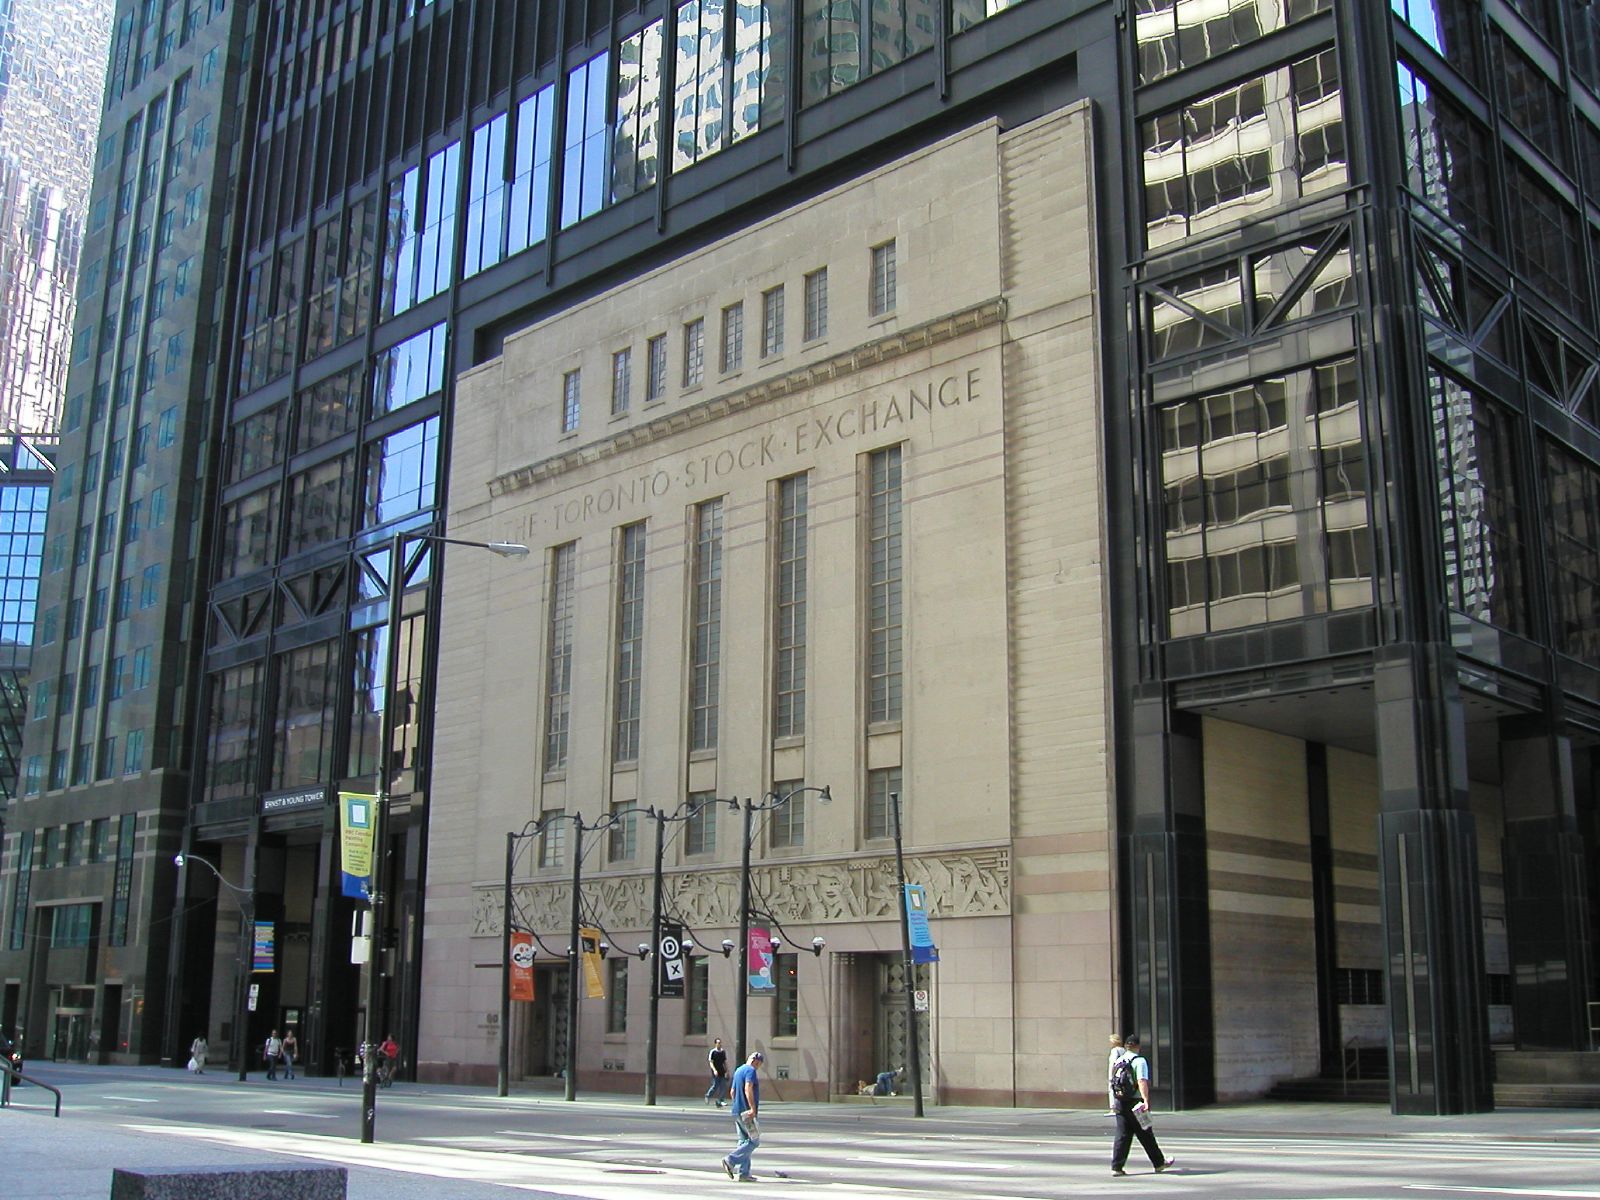 http://upload.wikimedia.org/wikipedia/commons/8/8e/Toronto_Stock_Exchange.jpg